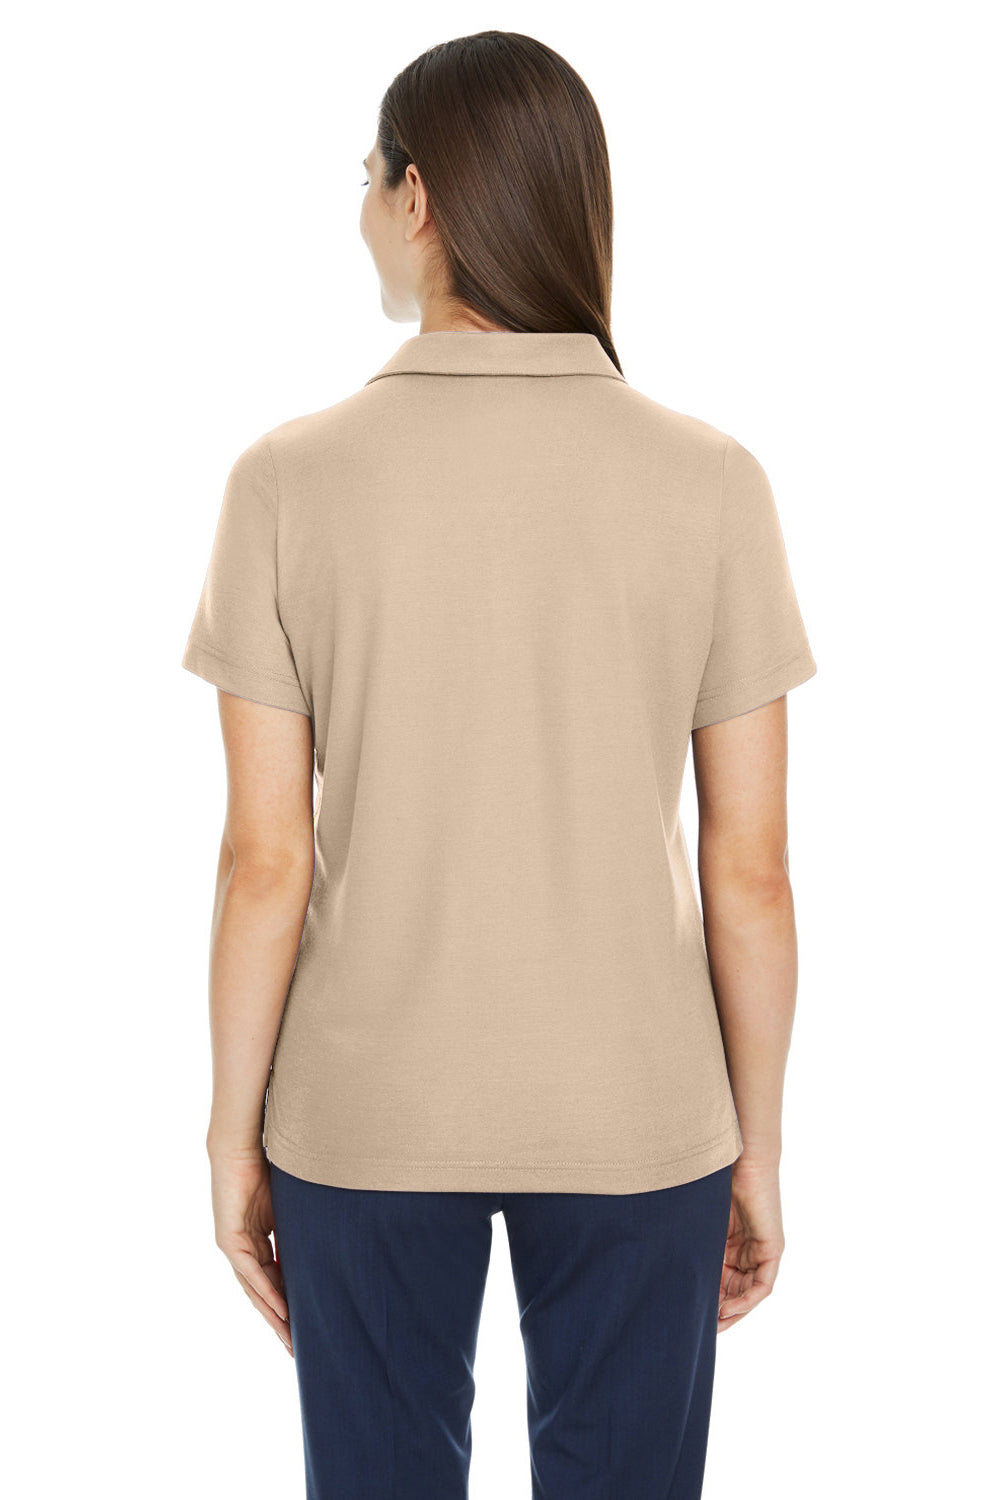 Core 365 CE112W Womens Fusion ChromaSoft Performance Moisture Wicking Pique Short Sleeve Polo Shirt Stone Back